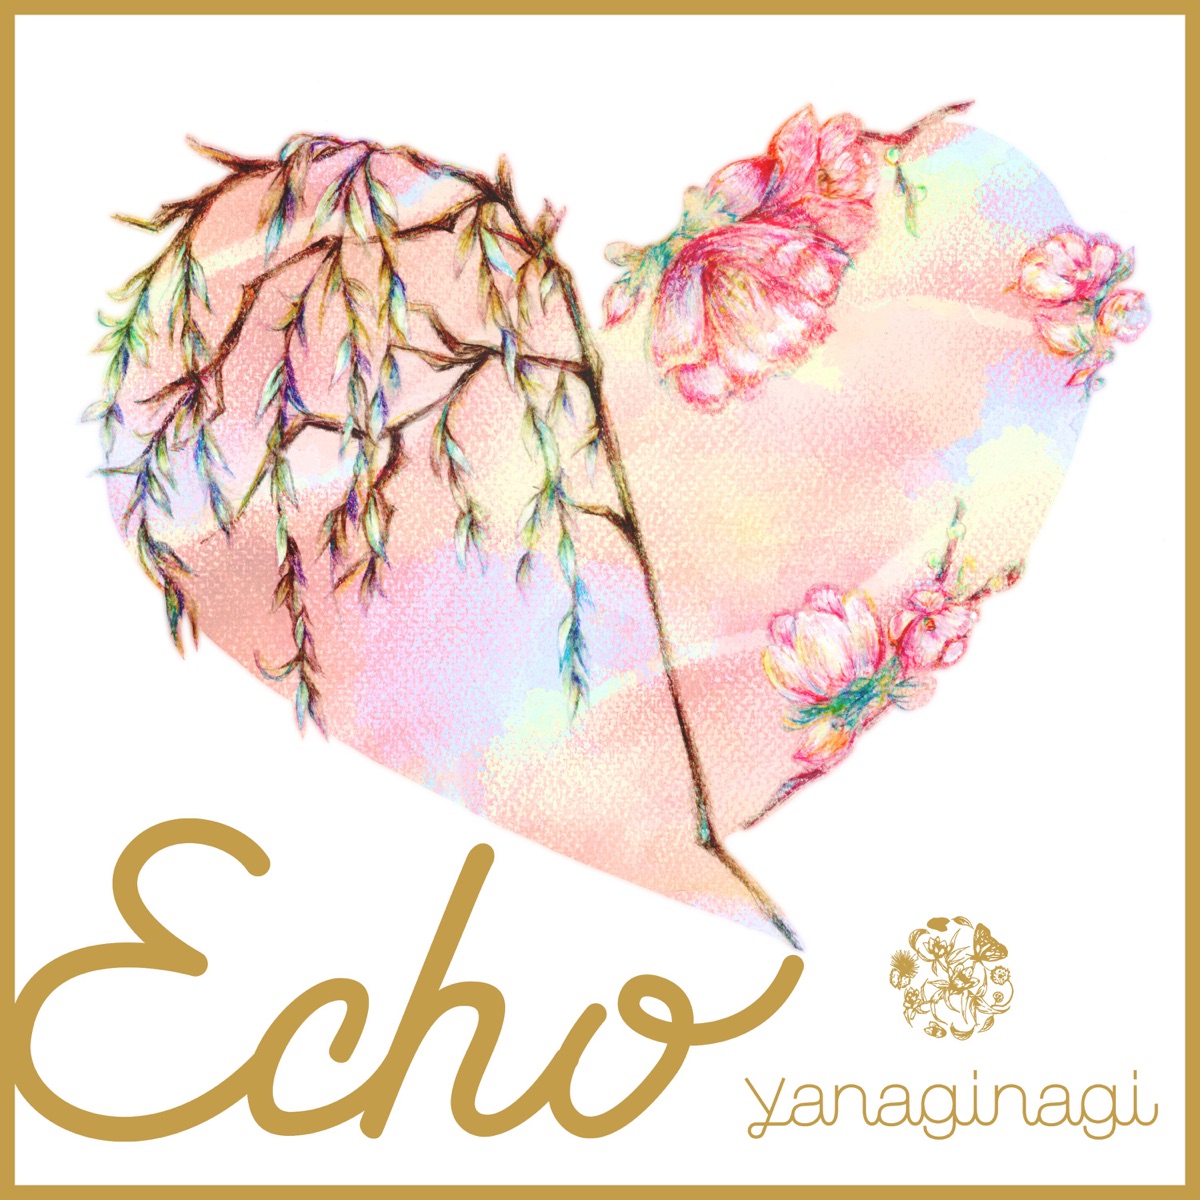 Cover art for『yanaginagi - Echo』from the release『Echo』